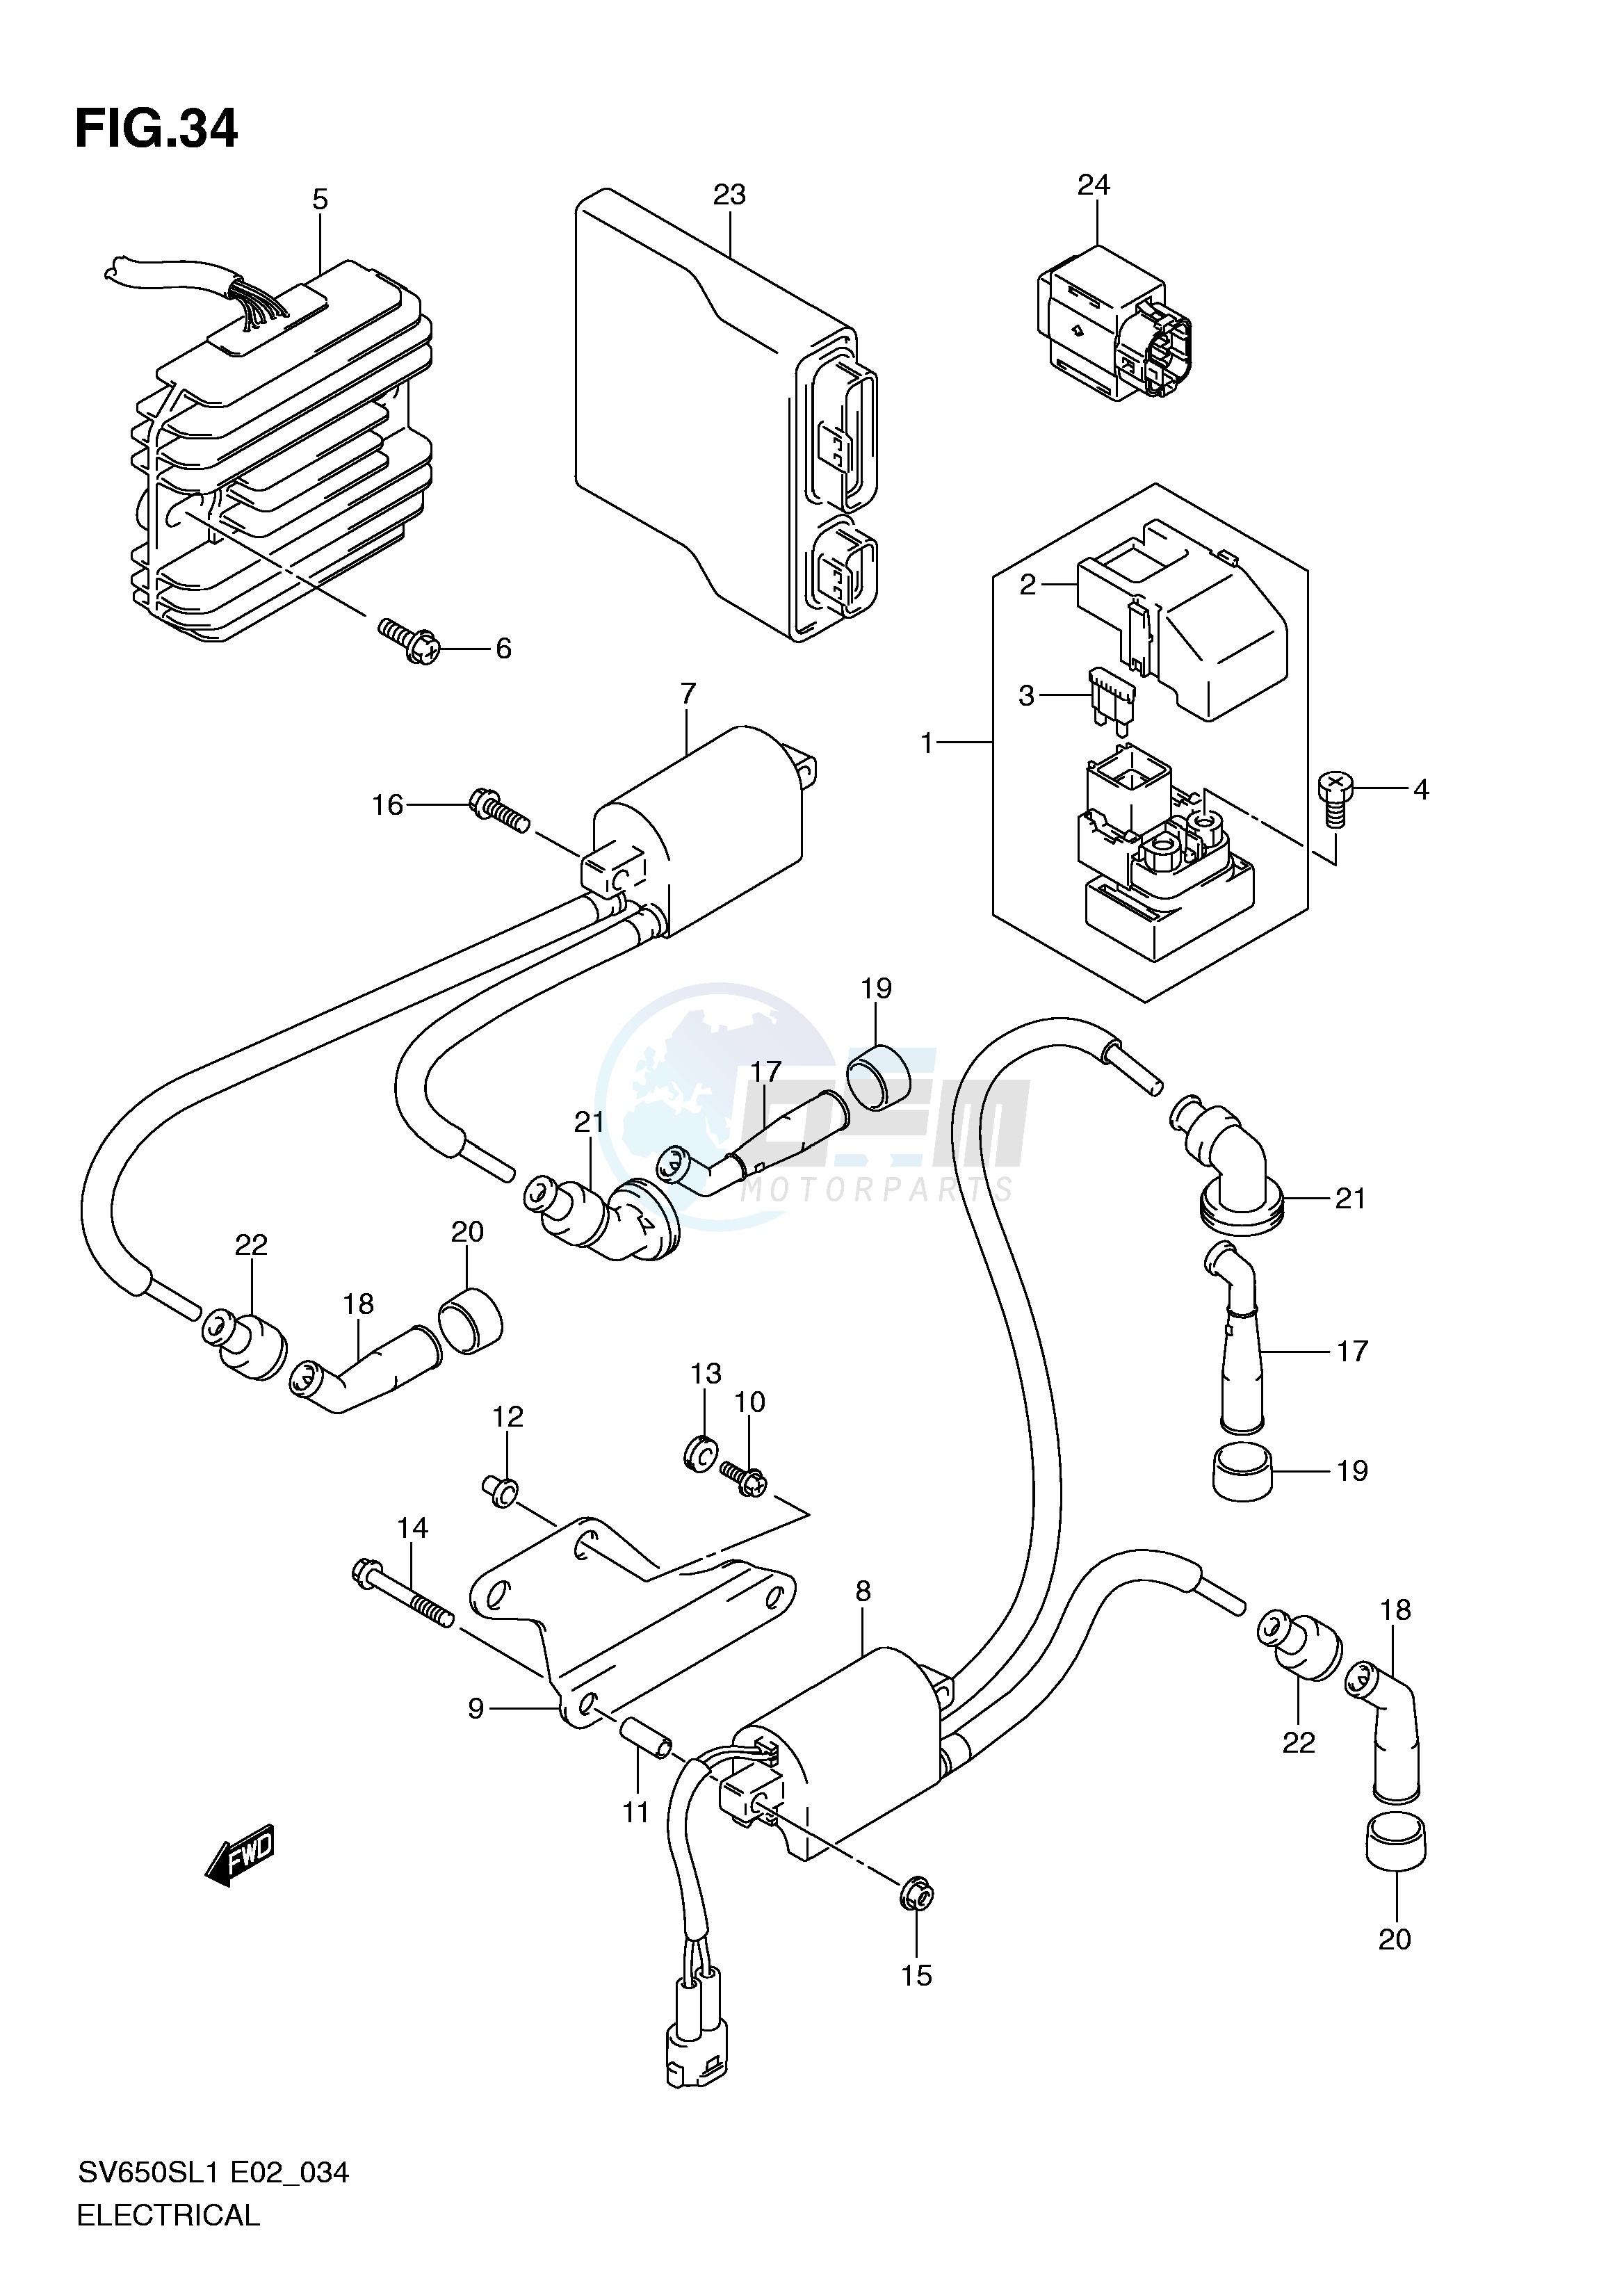 ELECTRICAL (SV650SL1 E2) blueprint